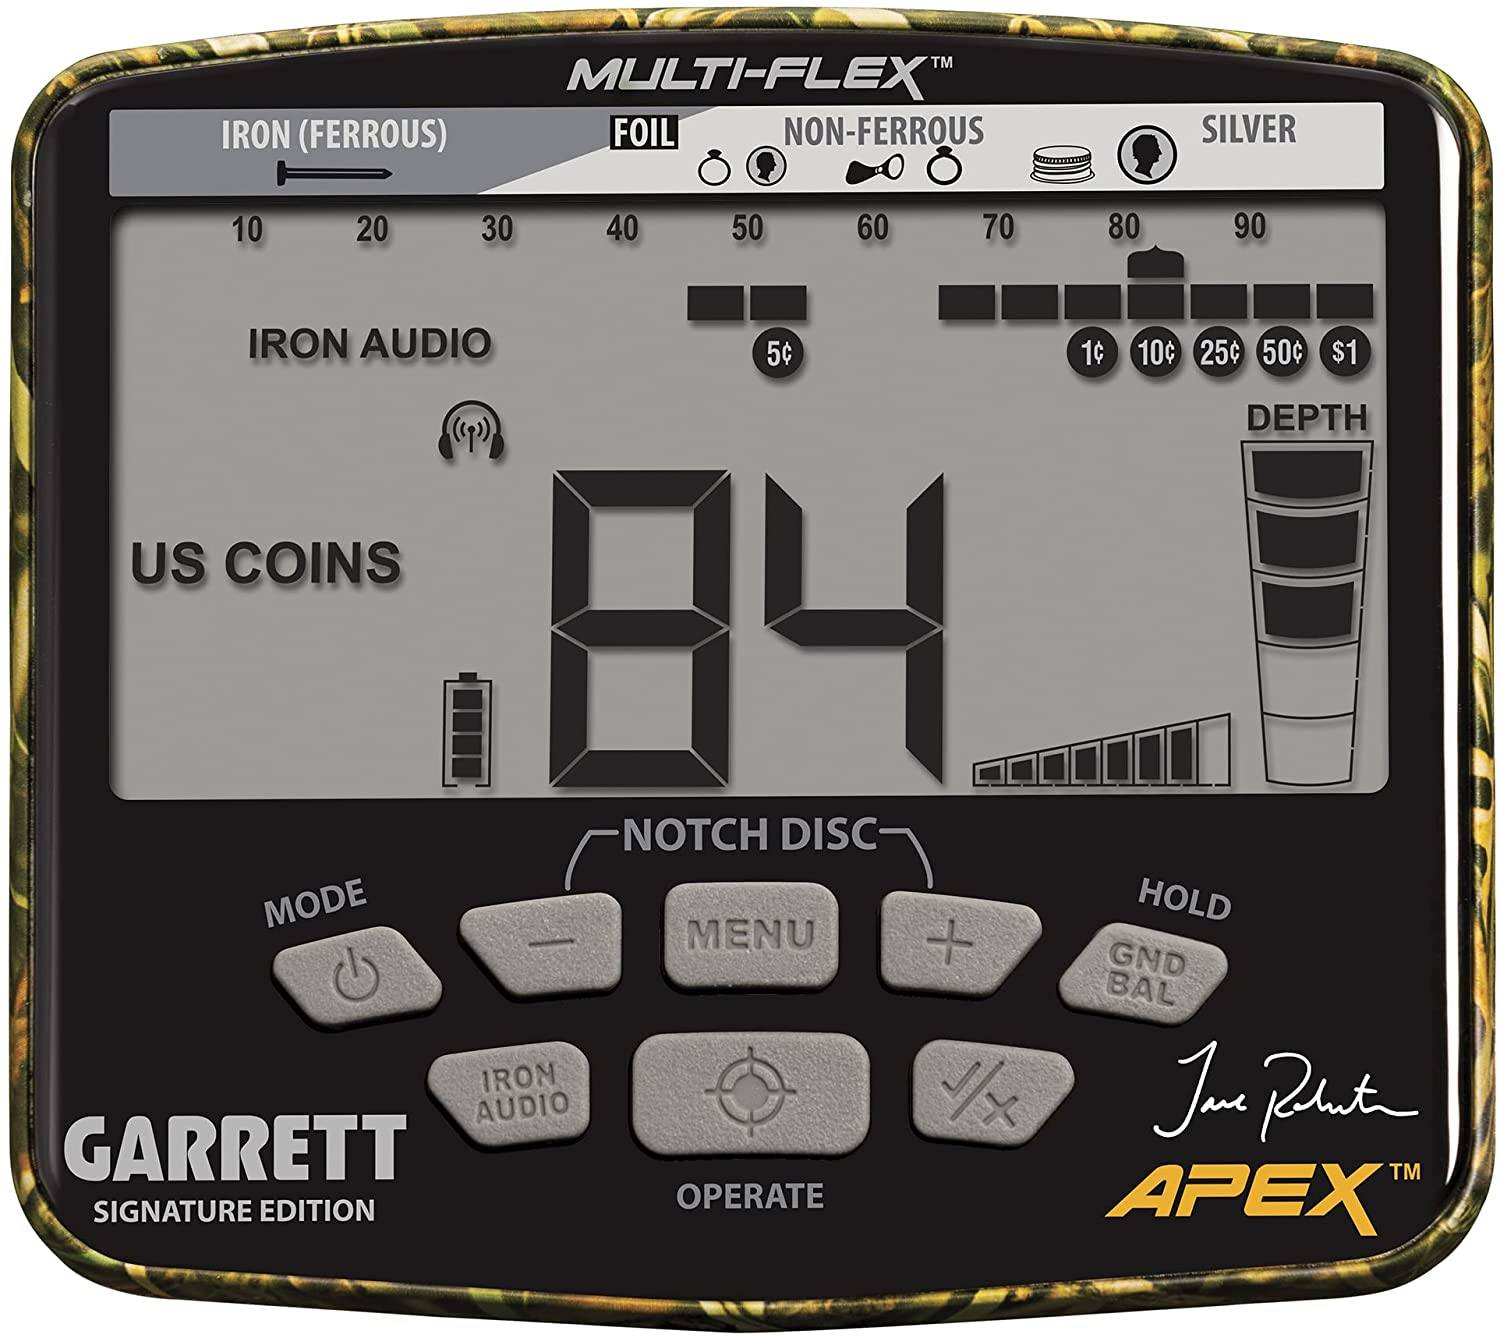 Garrett Jase Robertson Signature Edition APEX Metal Detector with Z-Lynk and Headphones